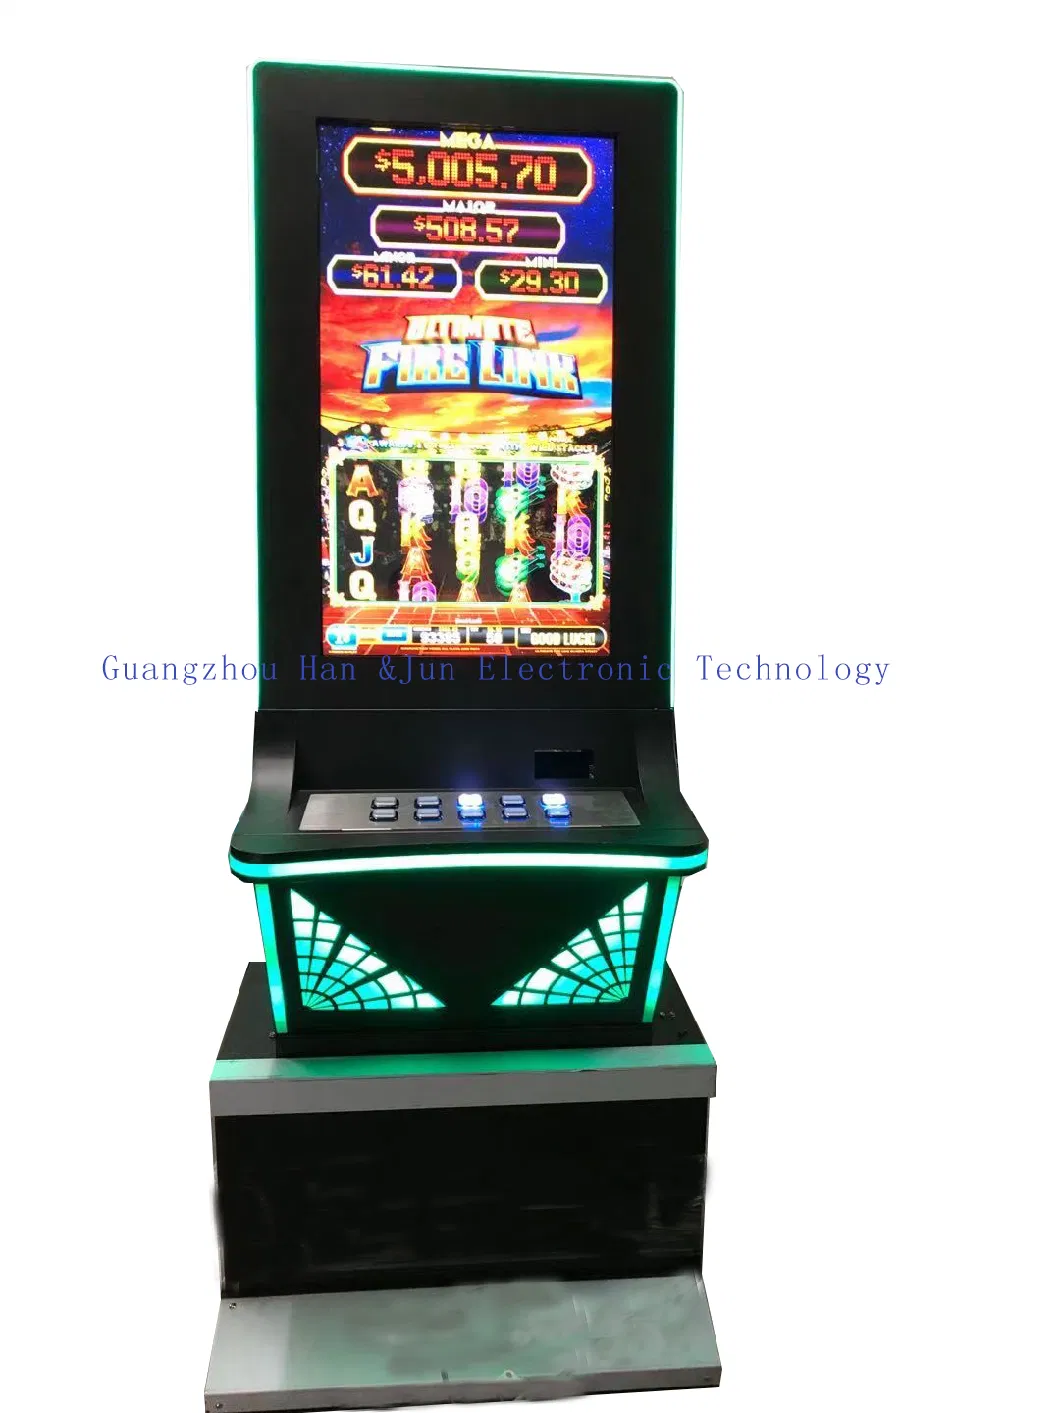 Hot Game Fire Link Amusement Arcade Slot Video Game Machine